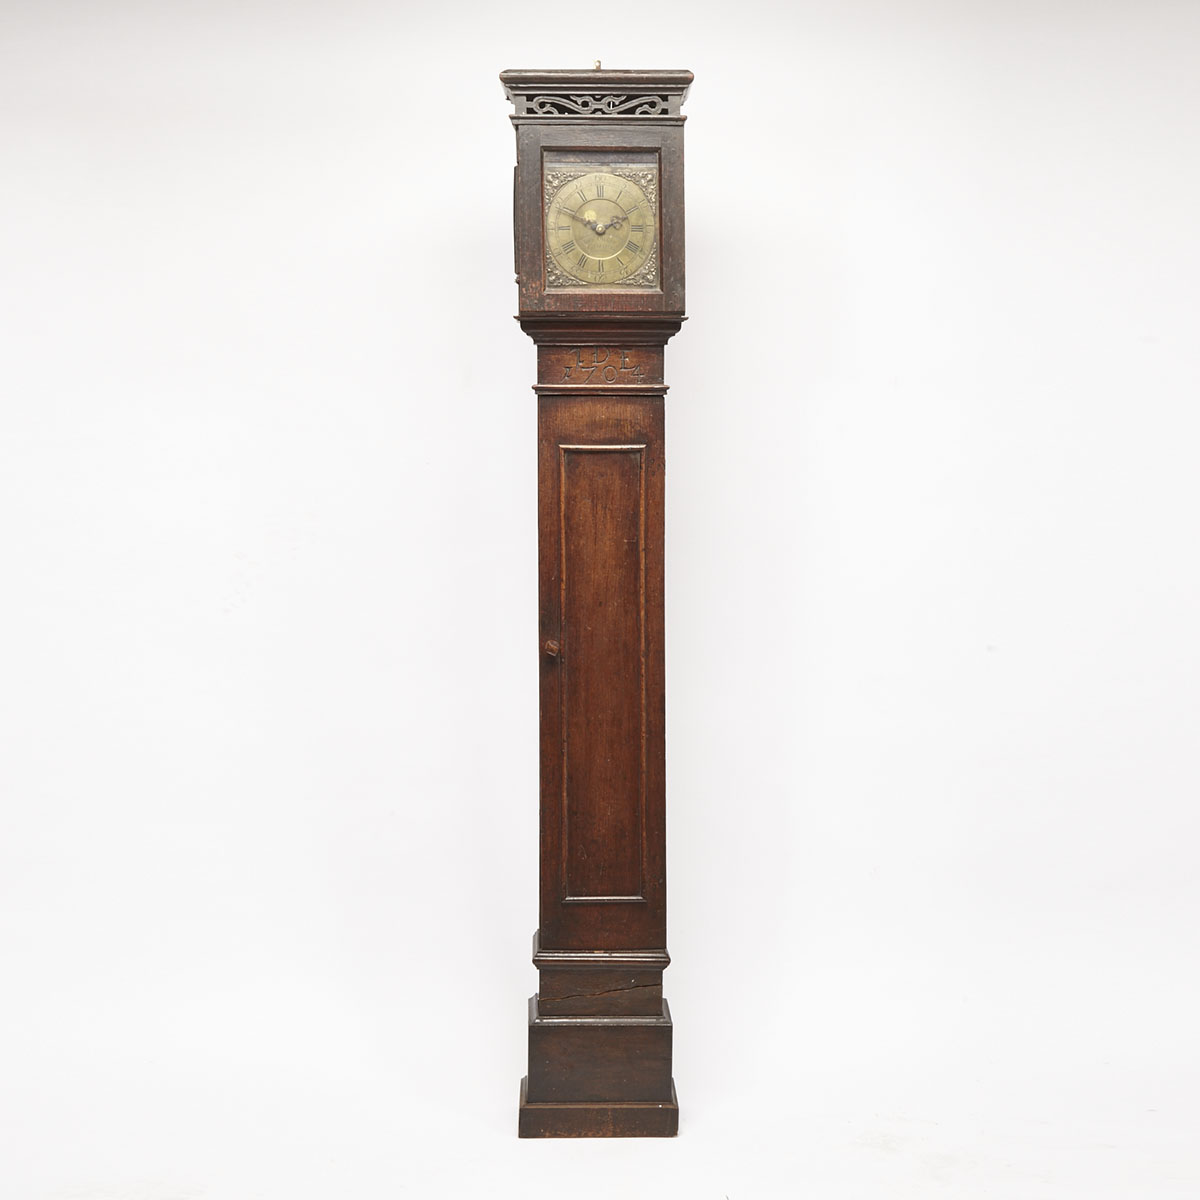 English Quaker Oak Tall Case Clock, Thos. Gilkes, Charlbury, early 18th century